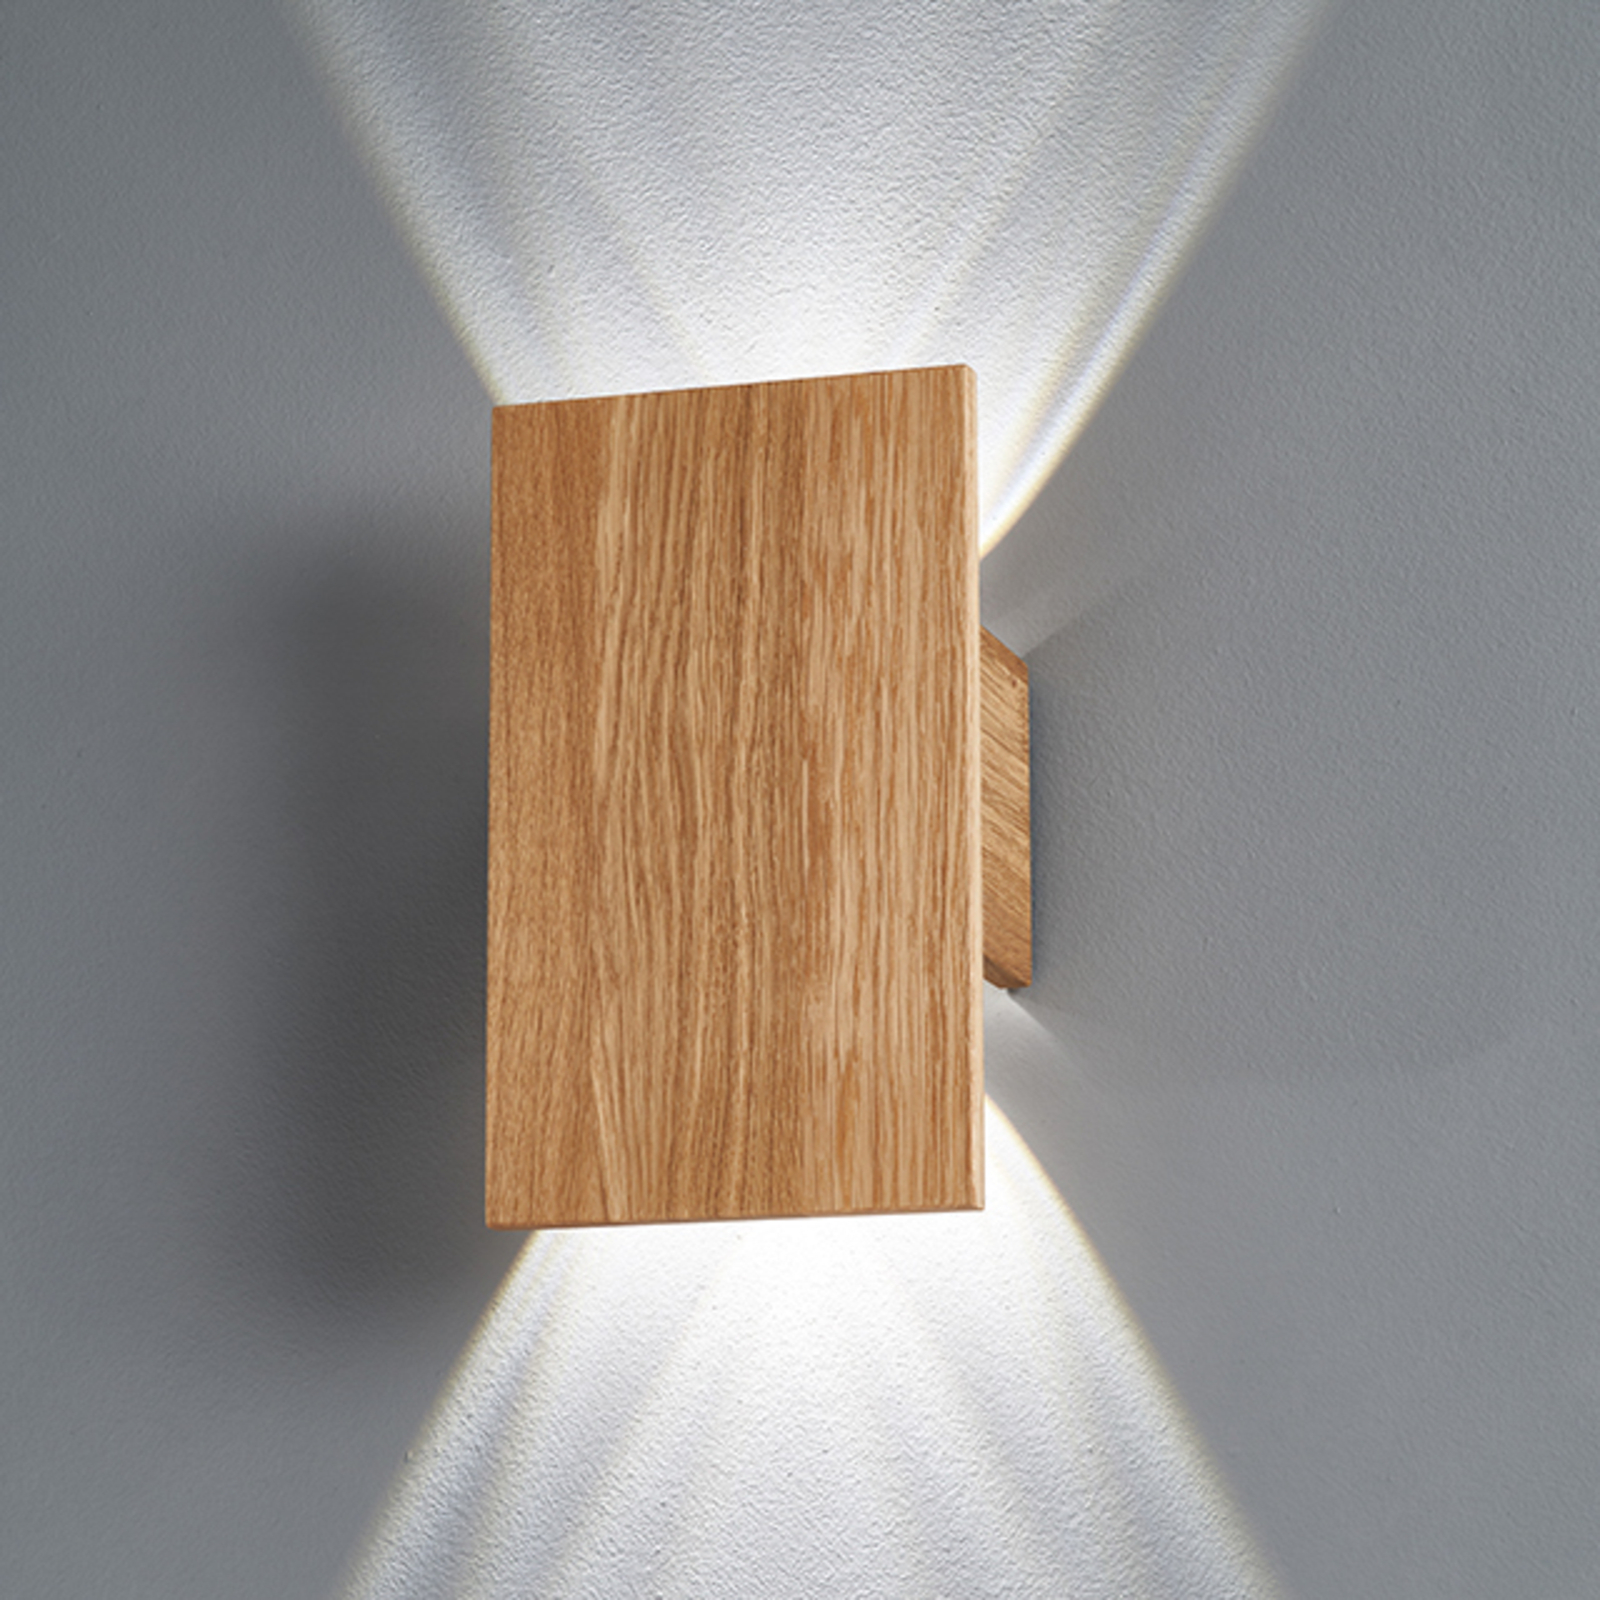 Kinkiet LED Shine-Wood dąb 4xLED 15x25cm